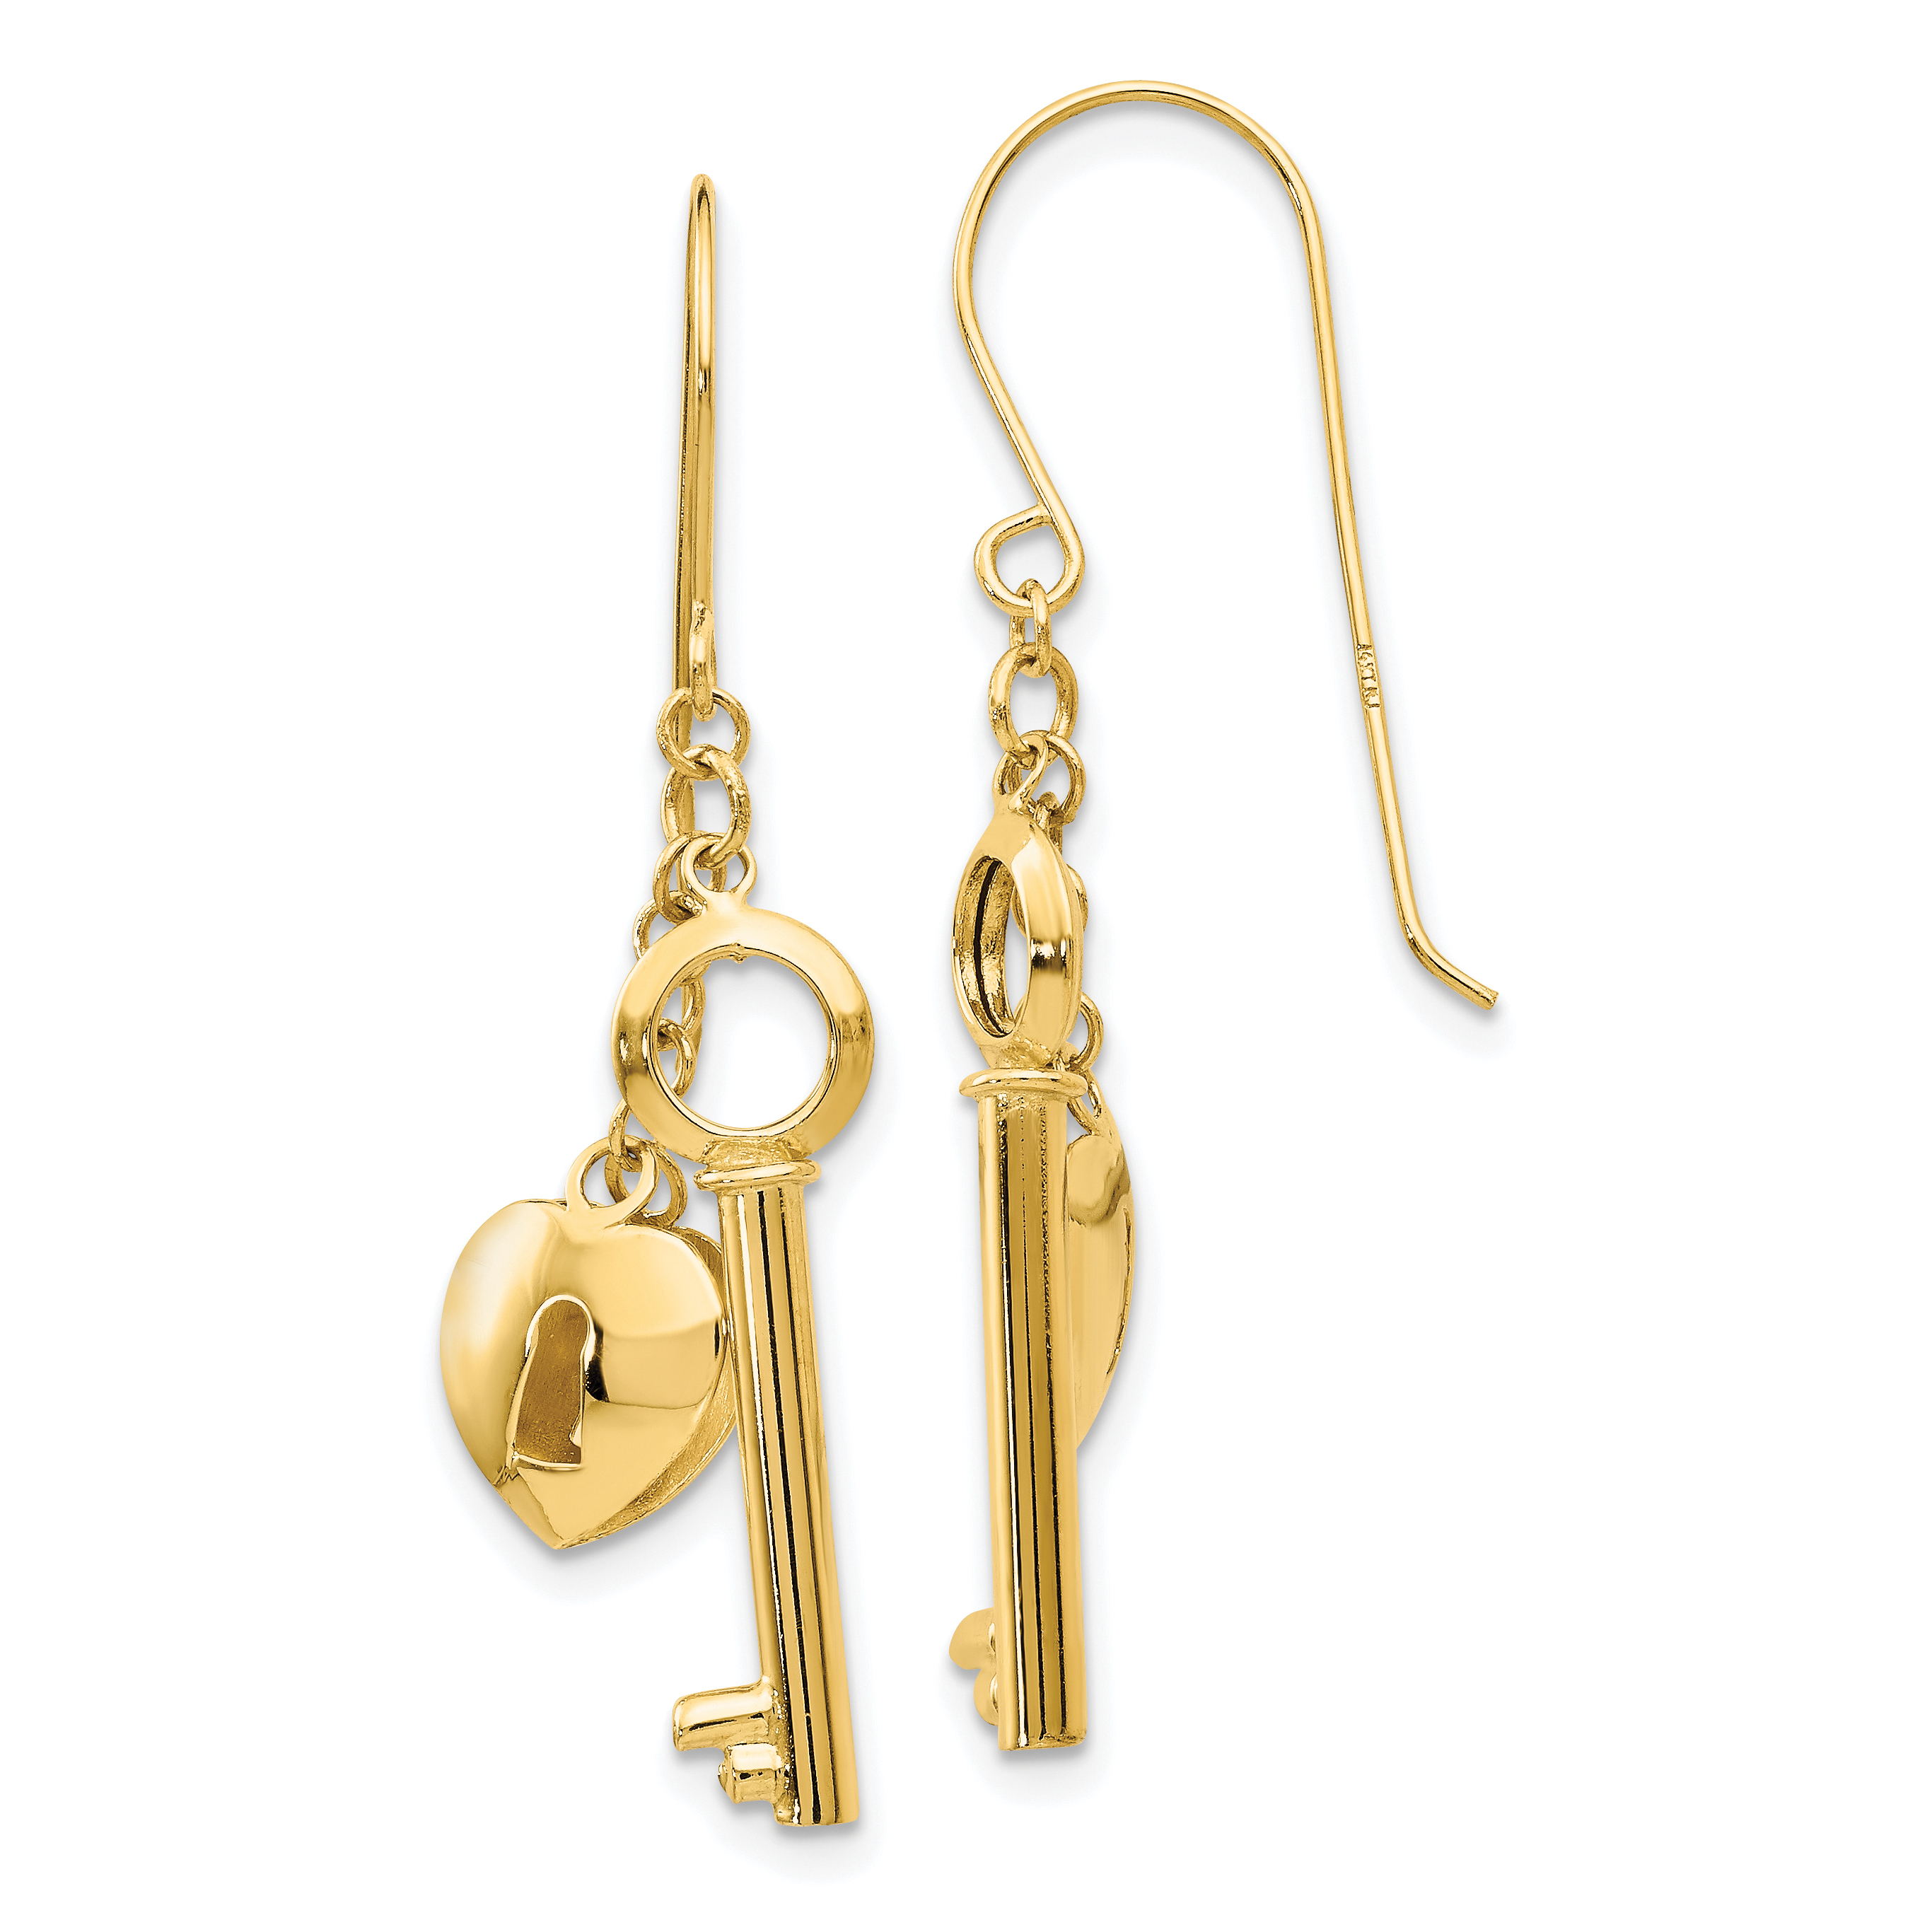 Gold Lock and Key Earrings